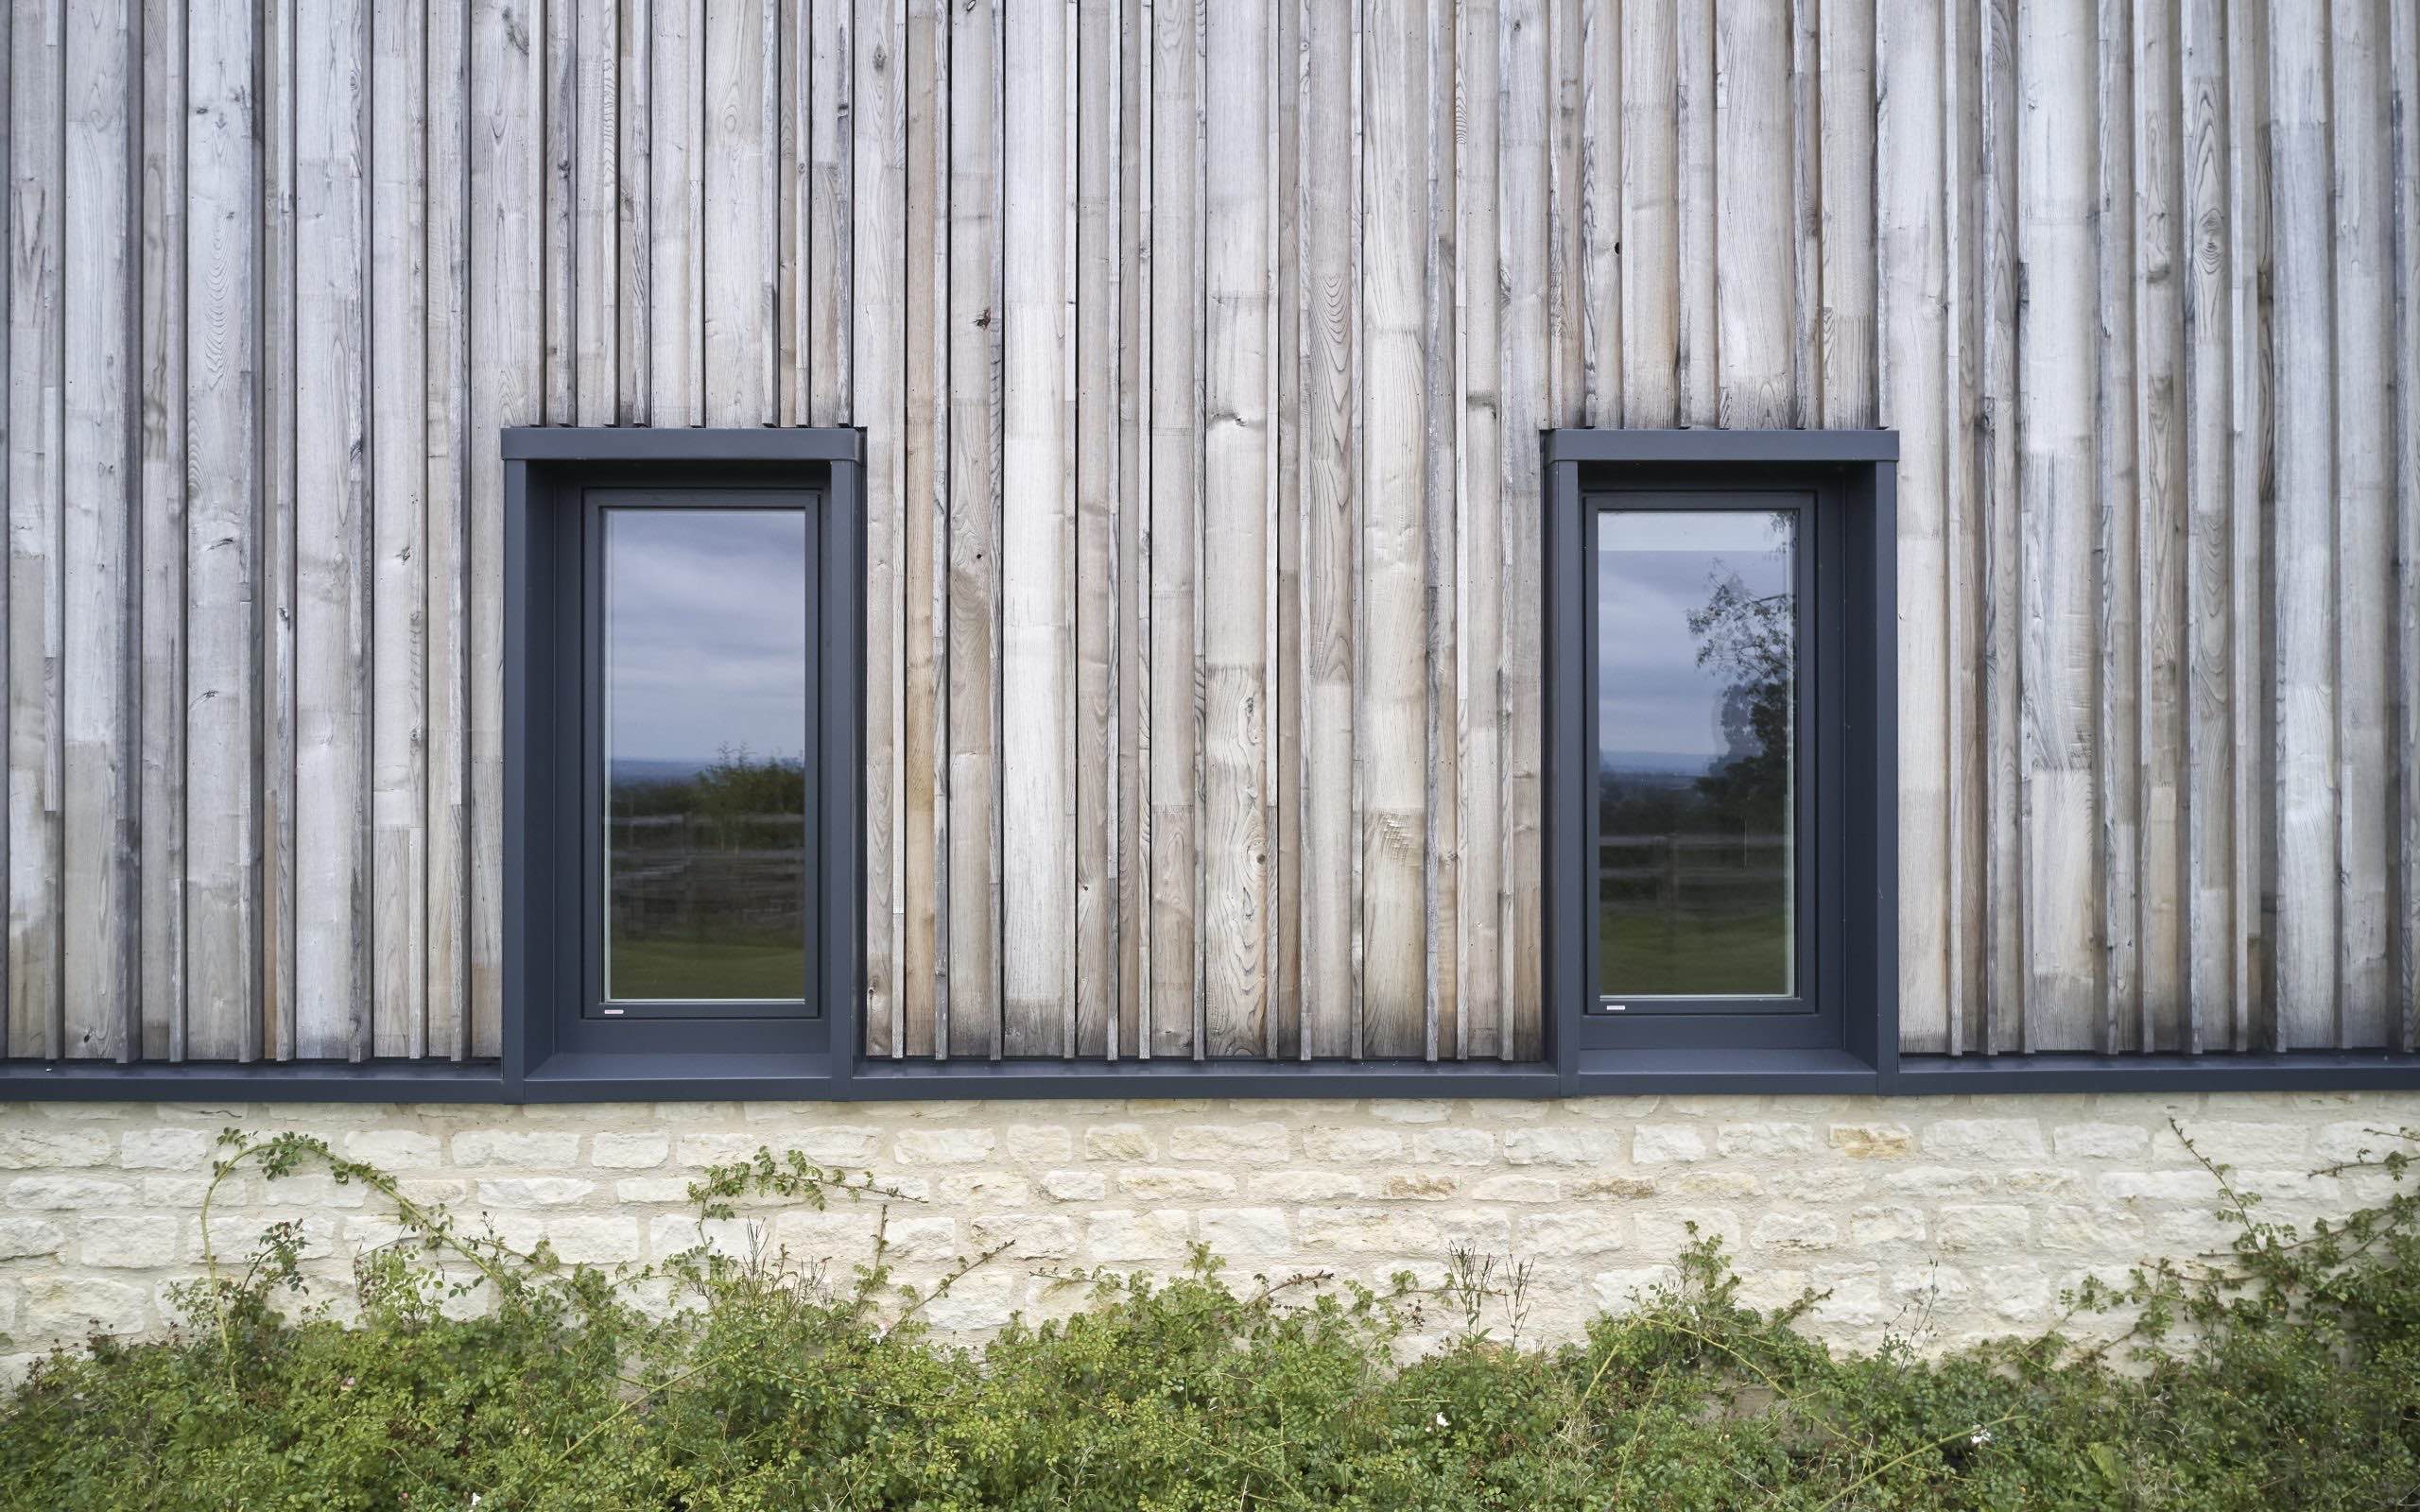 What are the benefits of uPVC alu clad windows over aluminium windows?